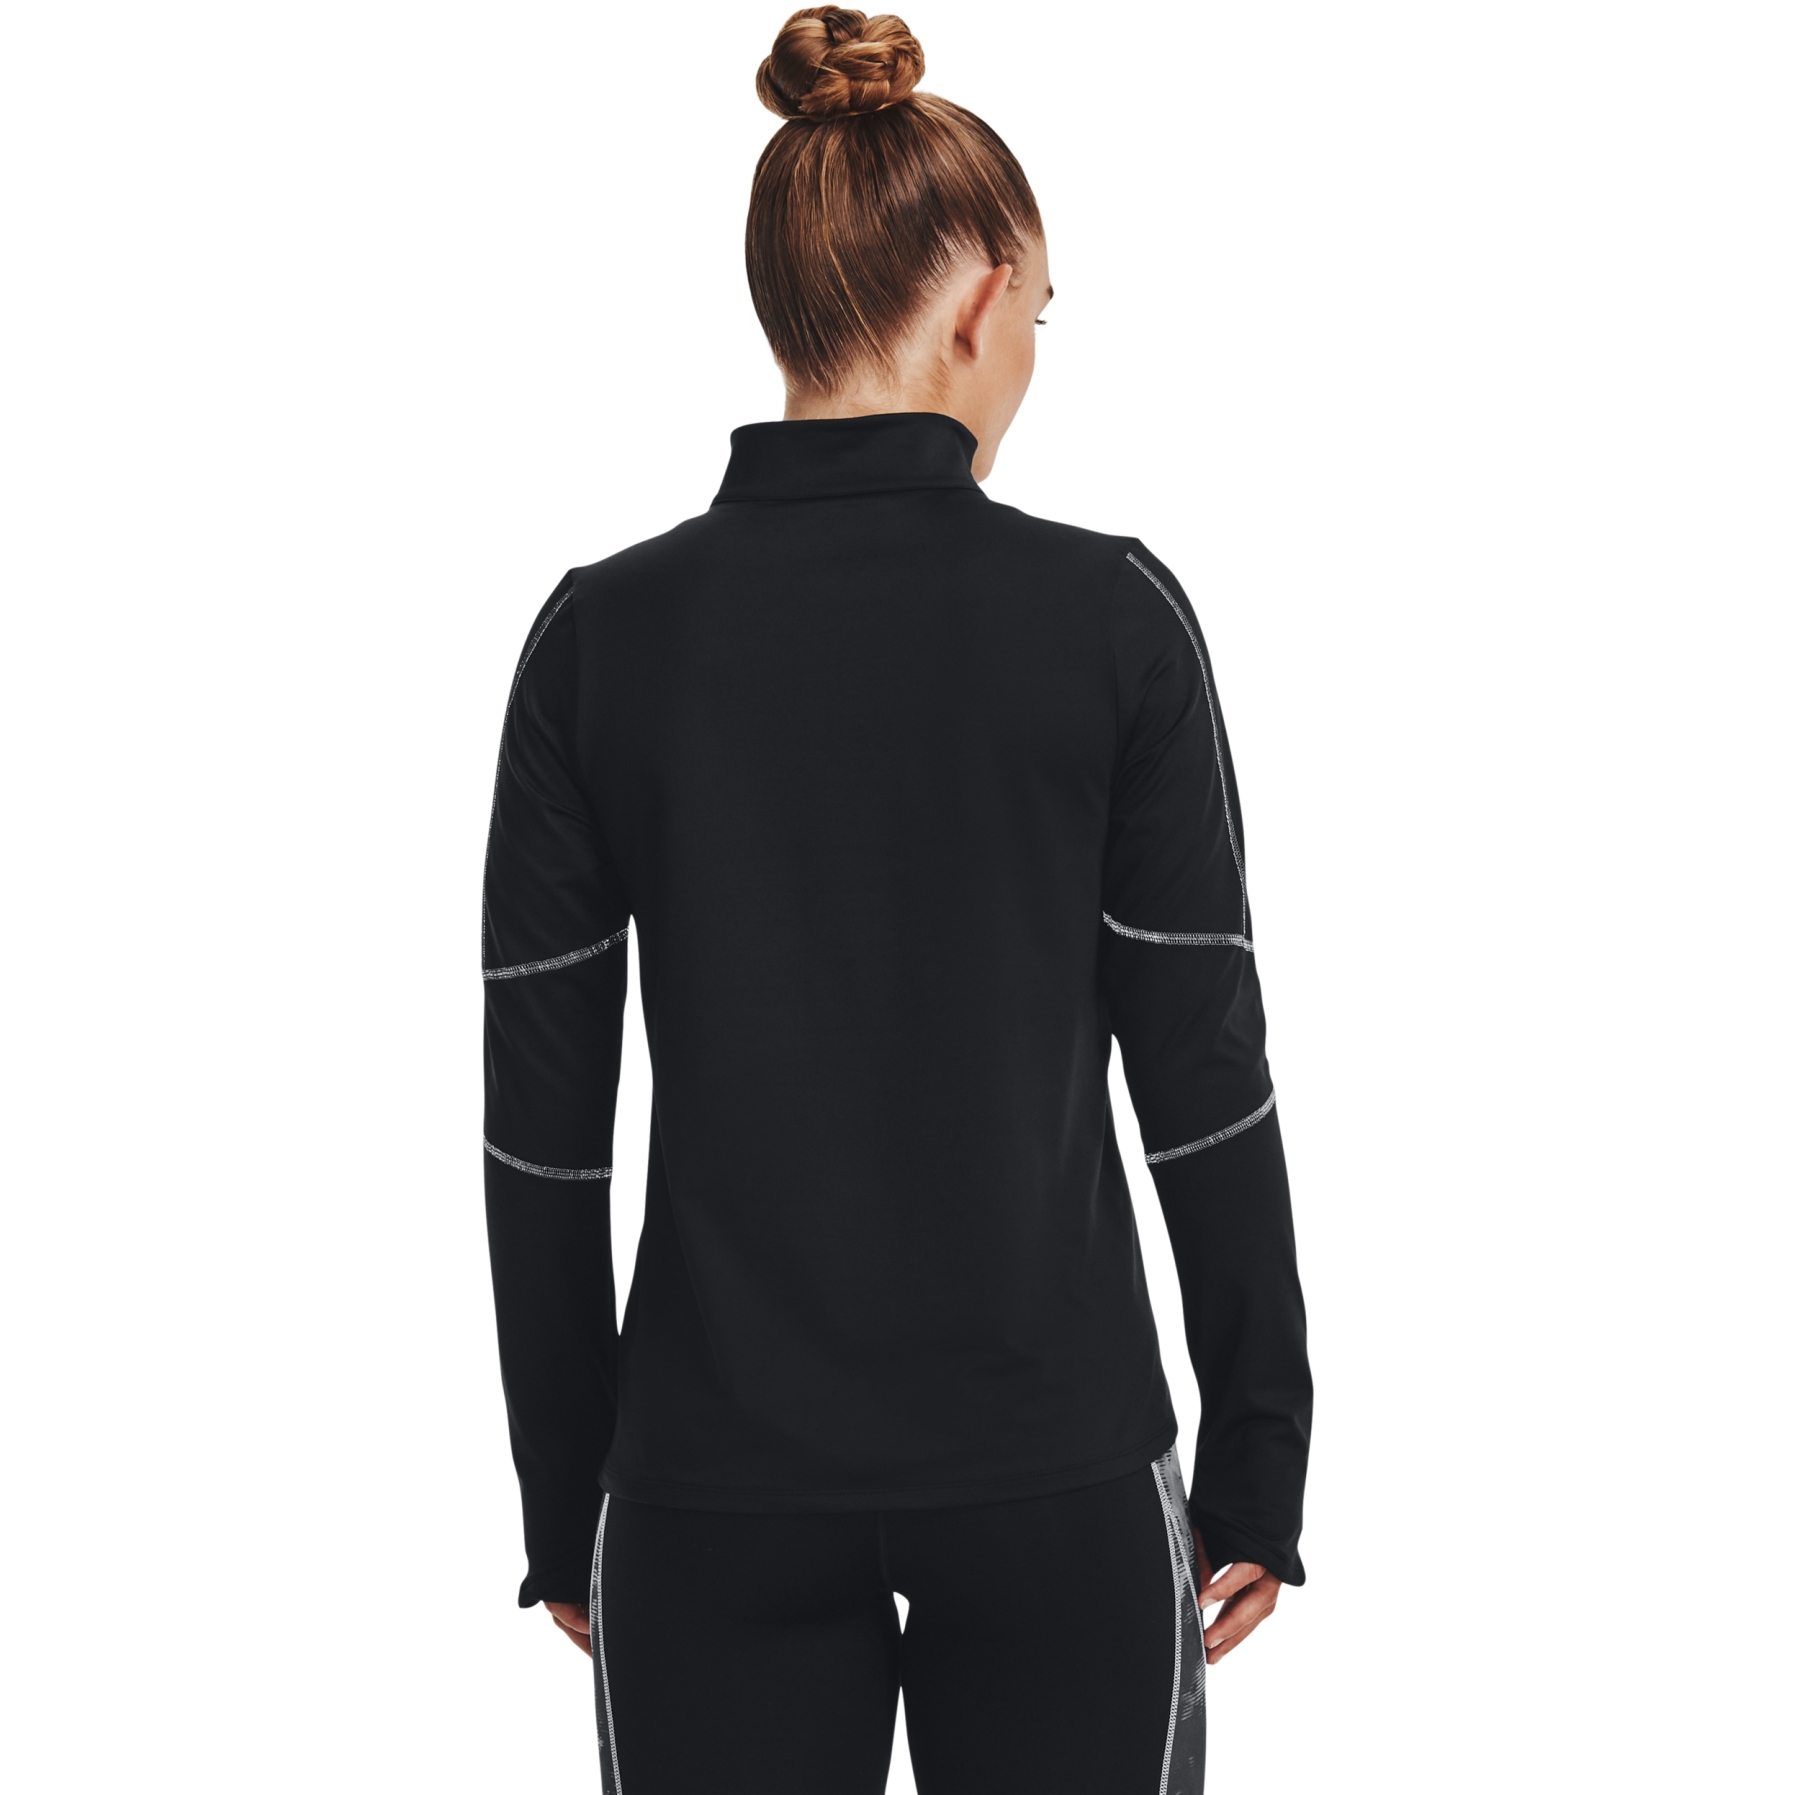 Under Armour UA Train Cold Weather 1/2 Zip Long Sleeve Shirt Women -  Black/Jet Gray